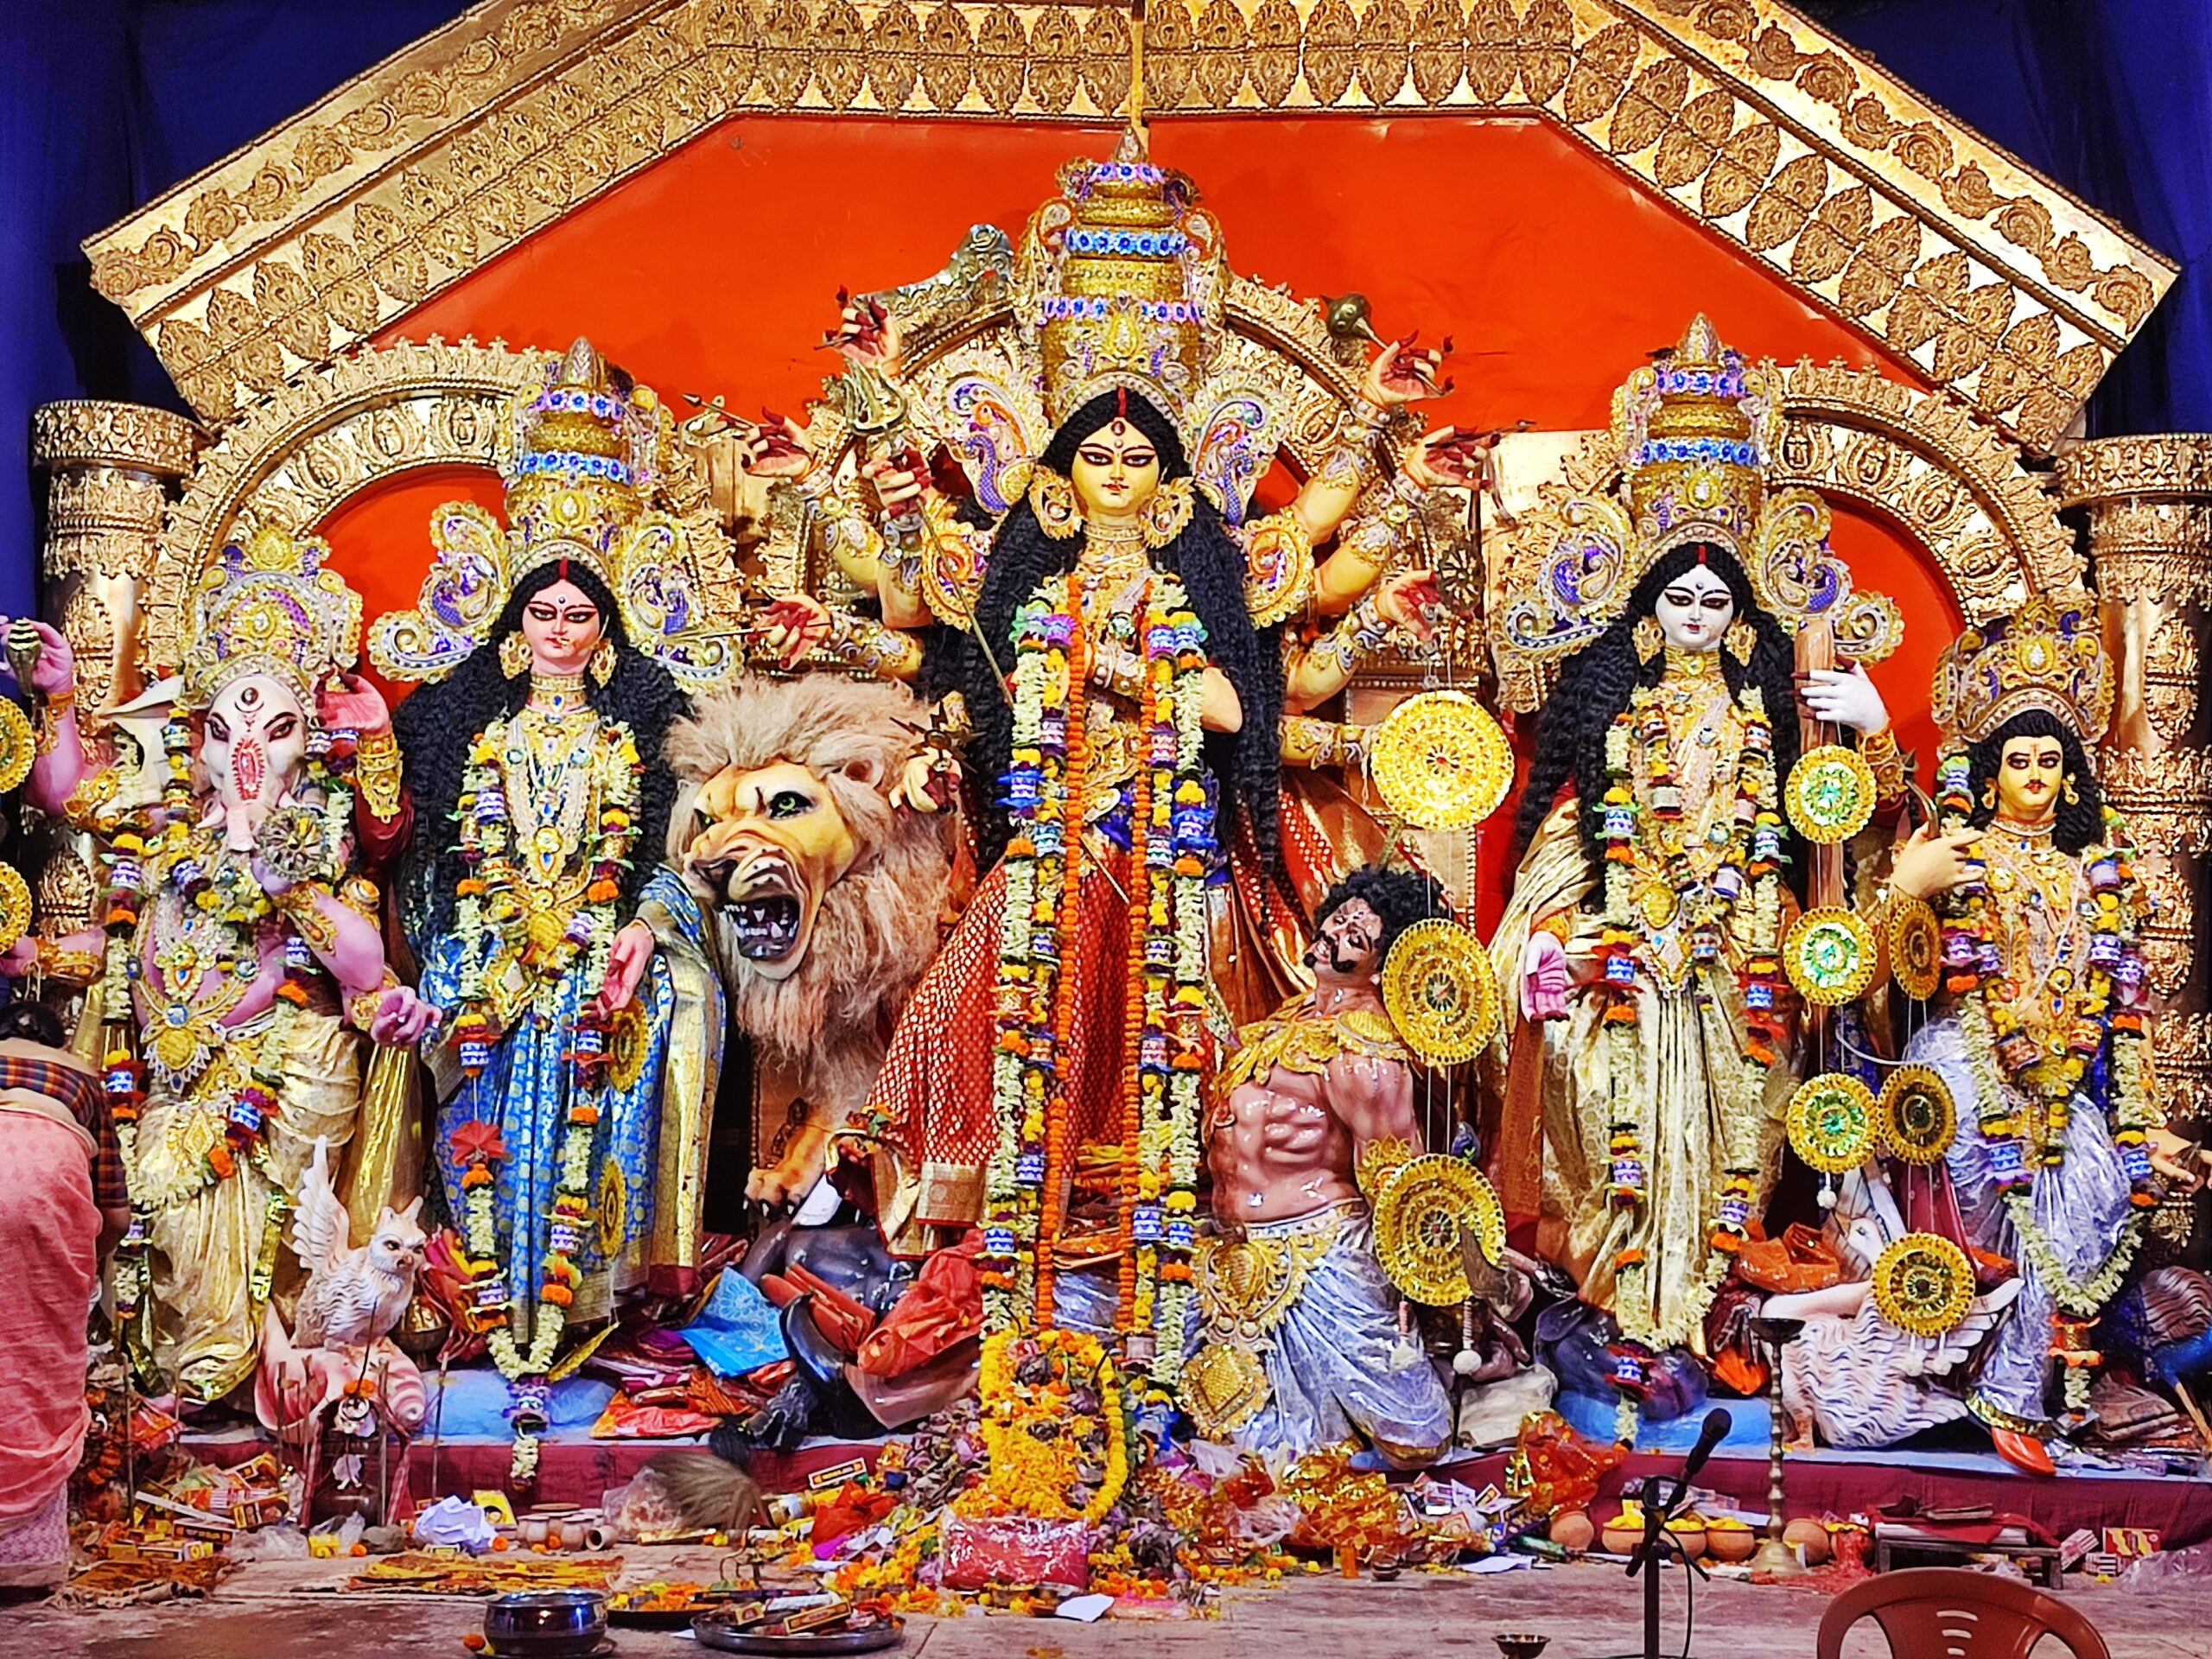 Fervour & fun returns with Durga Puja in Kolkata - Media India Group